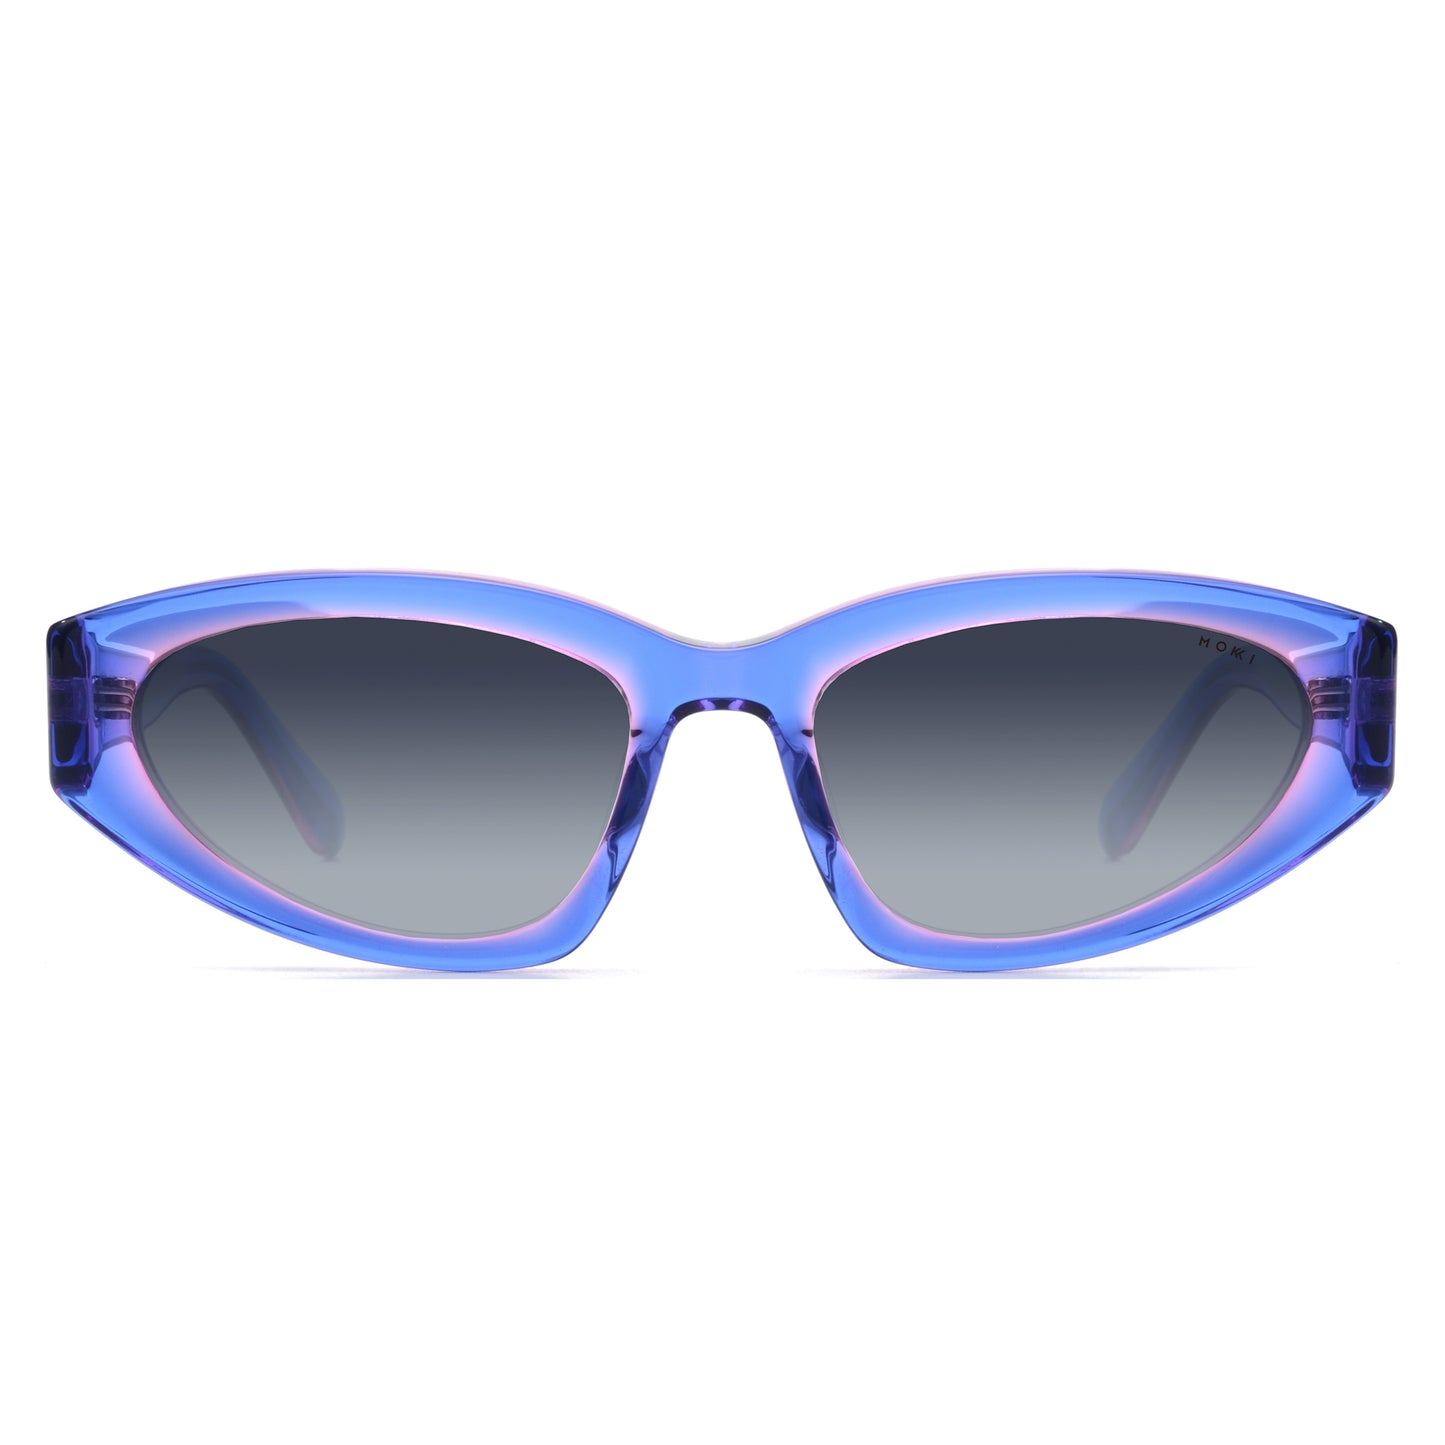 Mokki Streamlined Slim Sunglasses in fresh purple